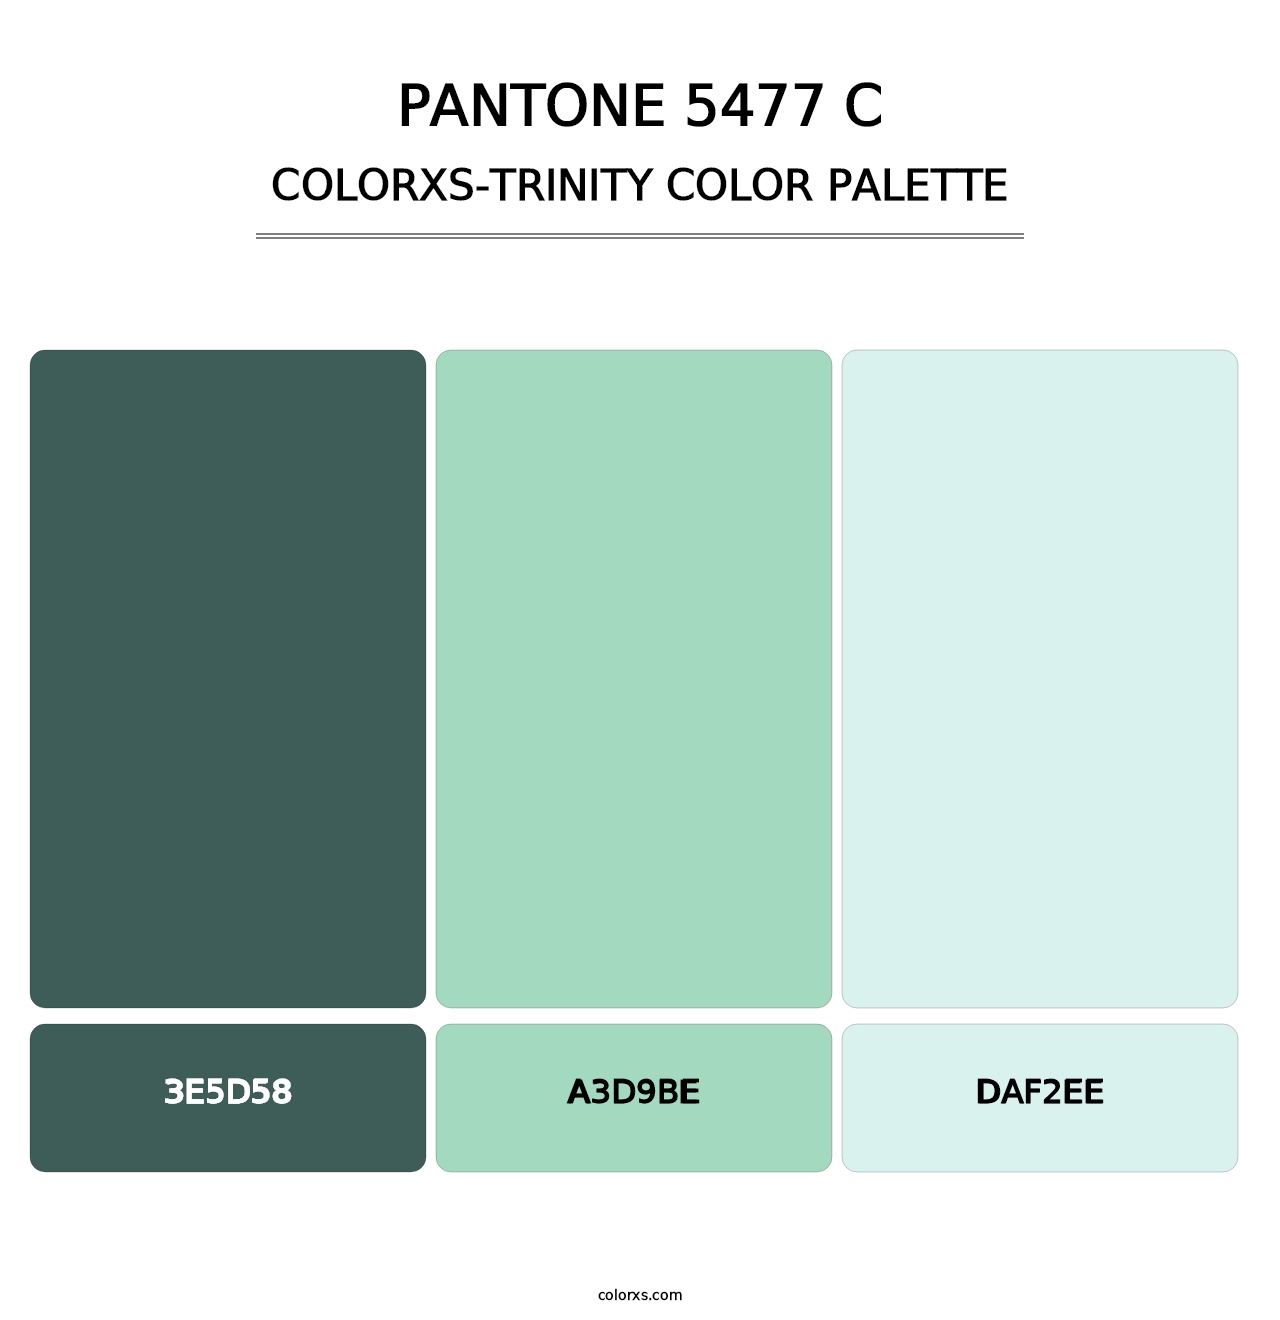 PANTONE 5477 C - Colorxs Trinity Palette